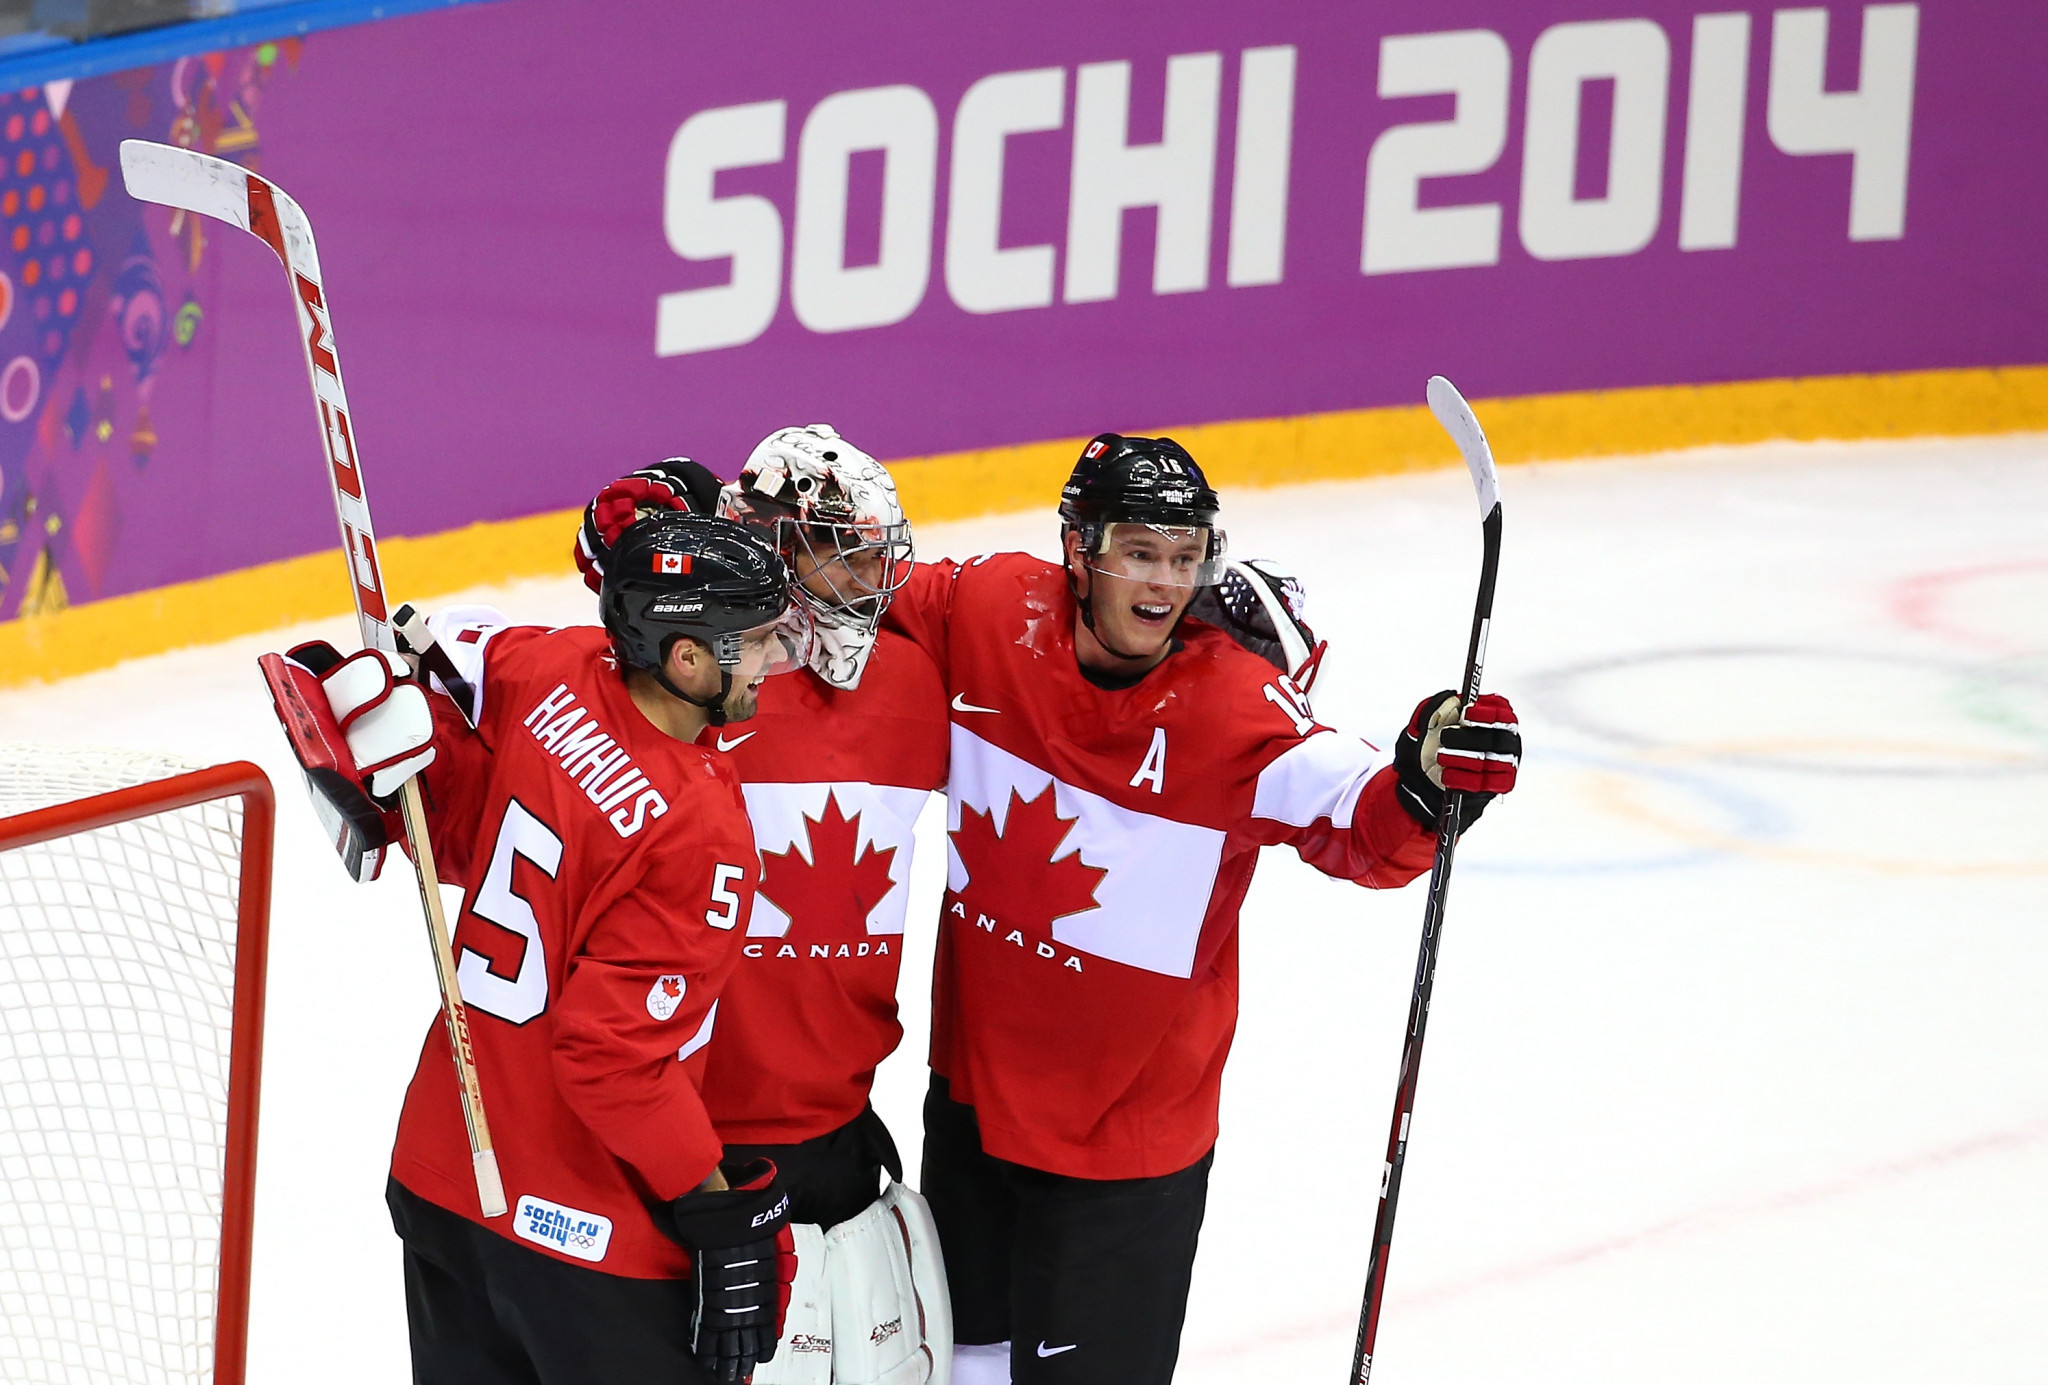 Canadian Olympic ice hockey champion Hamhuis retires